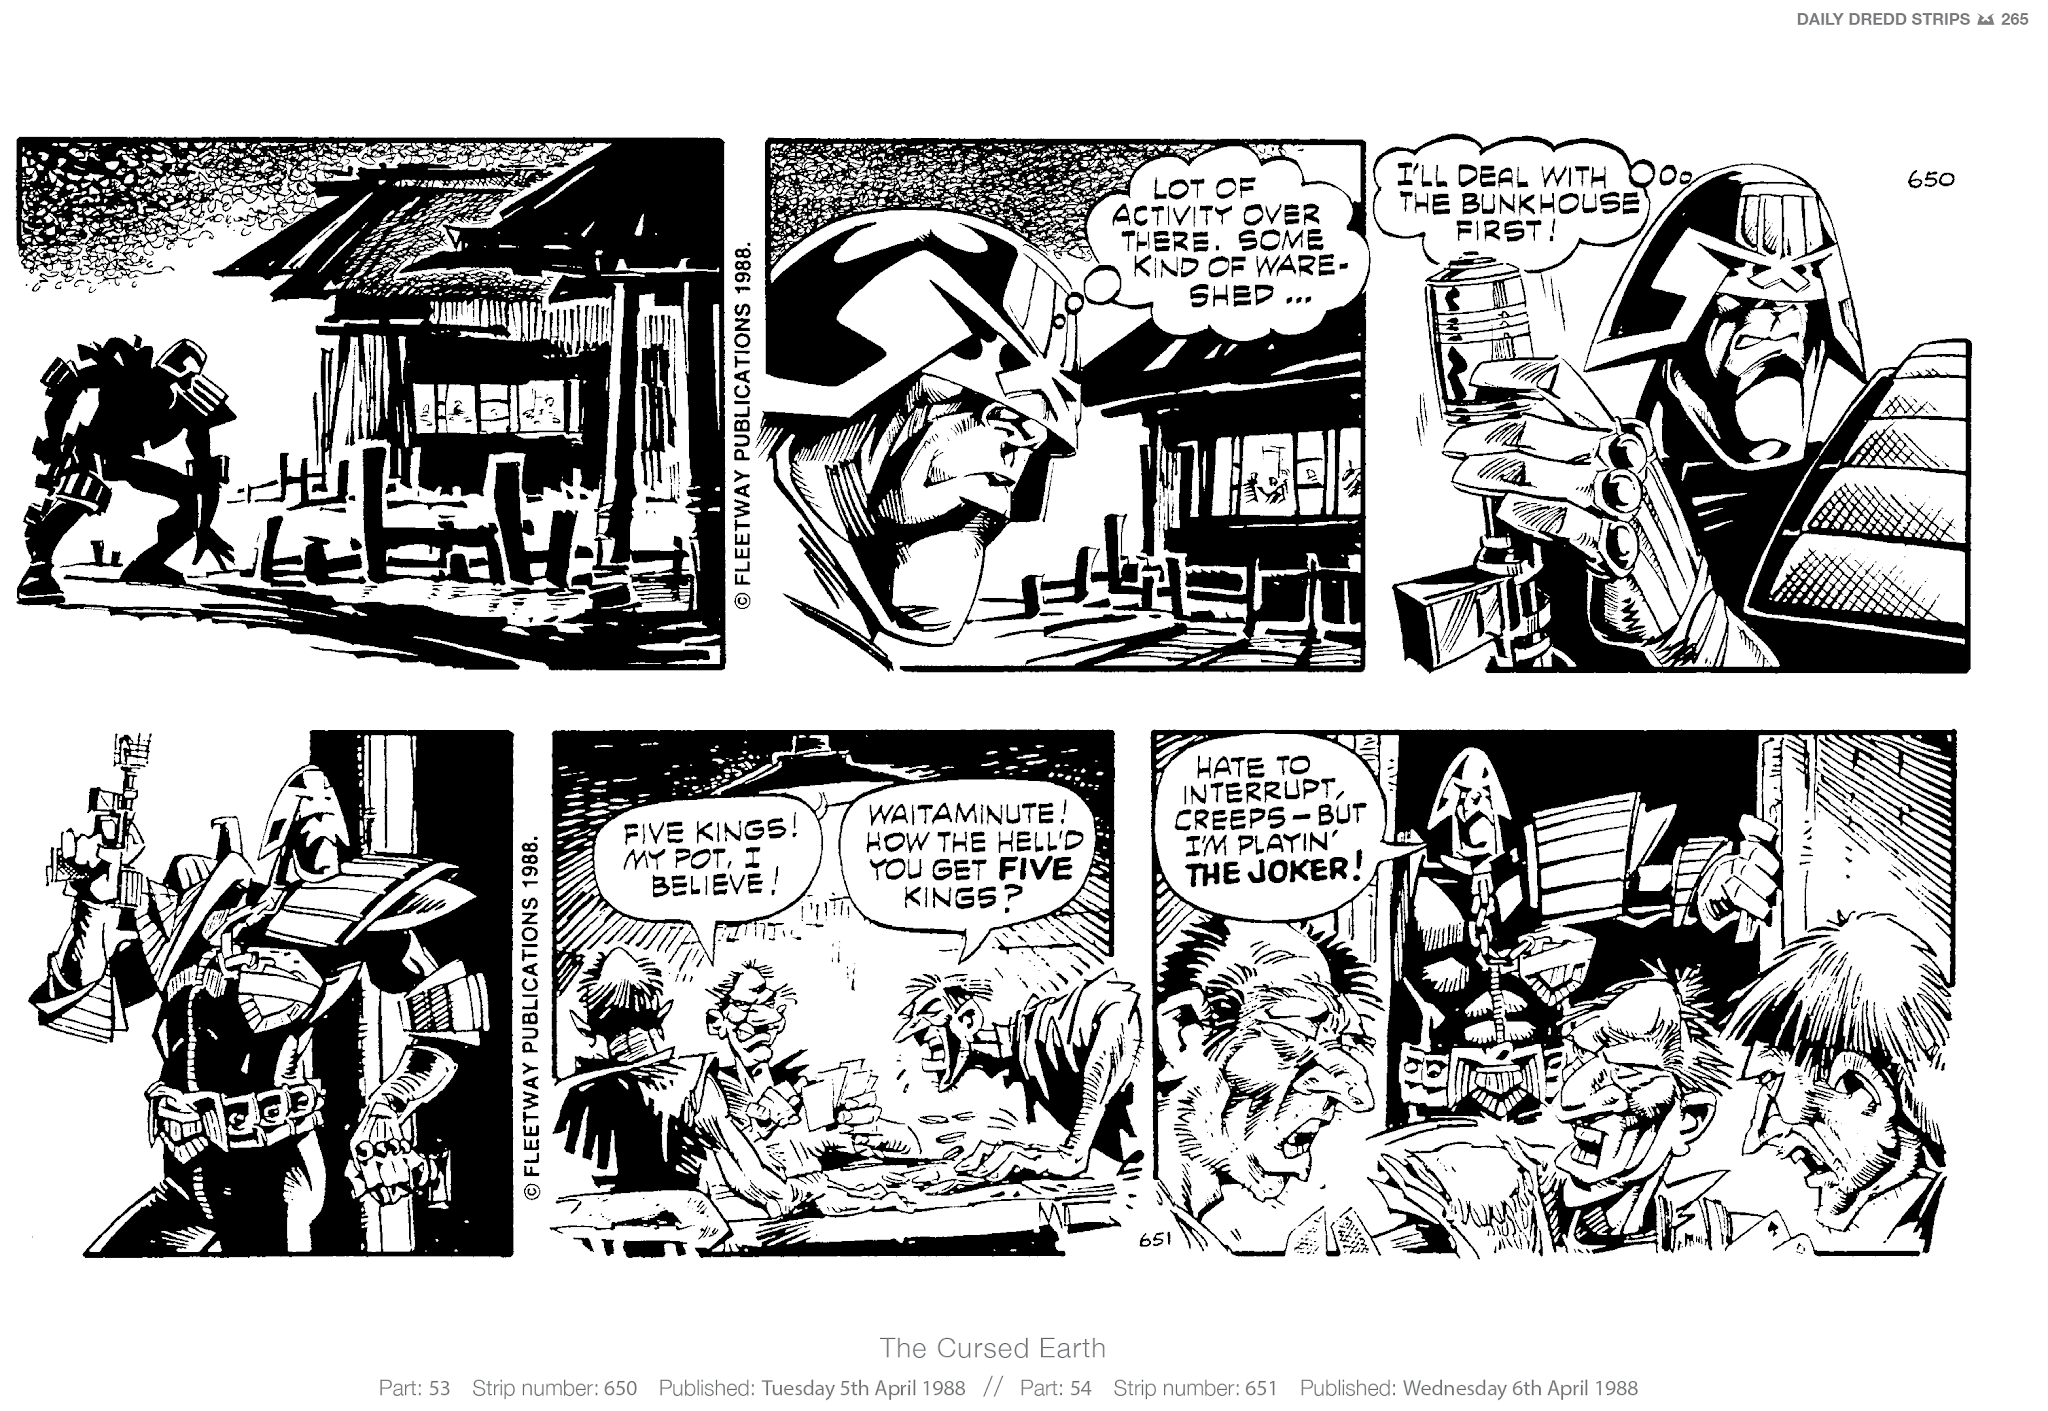 Read online Judge Dredd: The Daily Dredds comic -  Issue # TPB 2 - 268